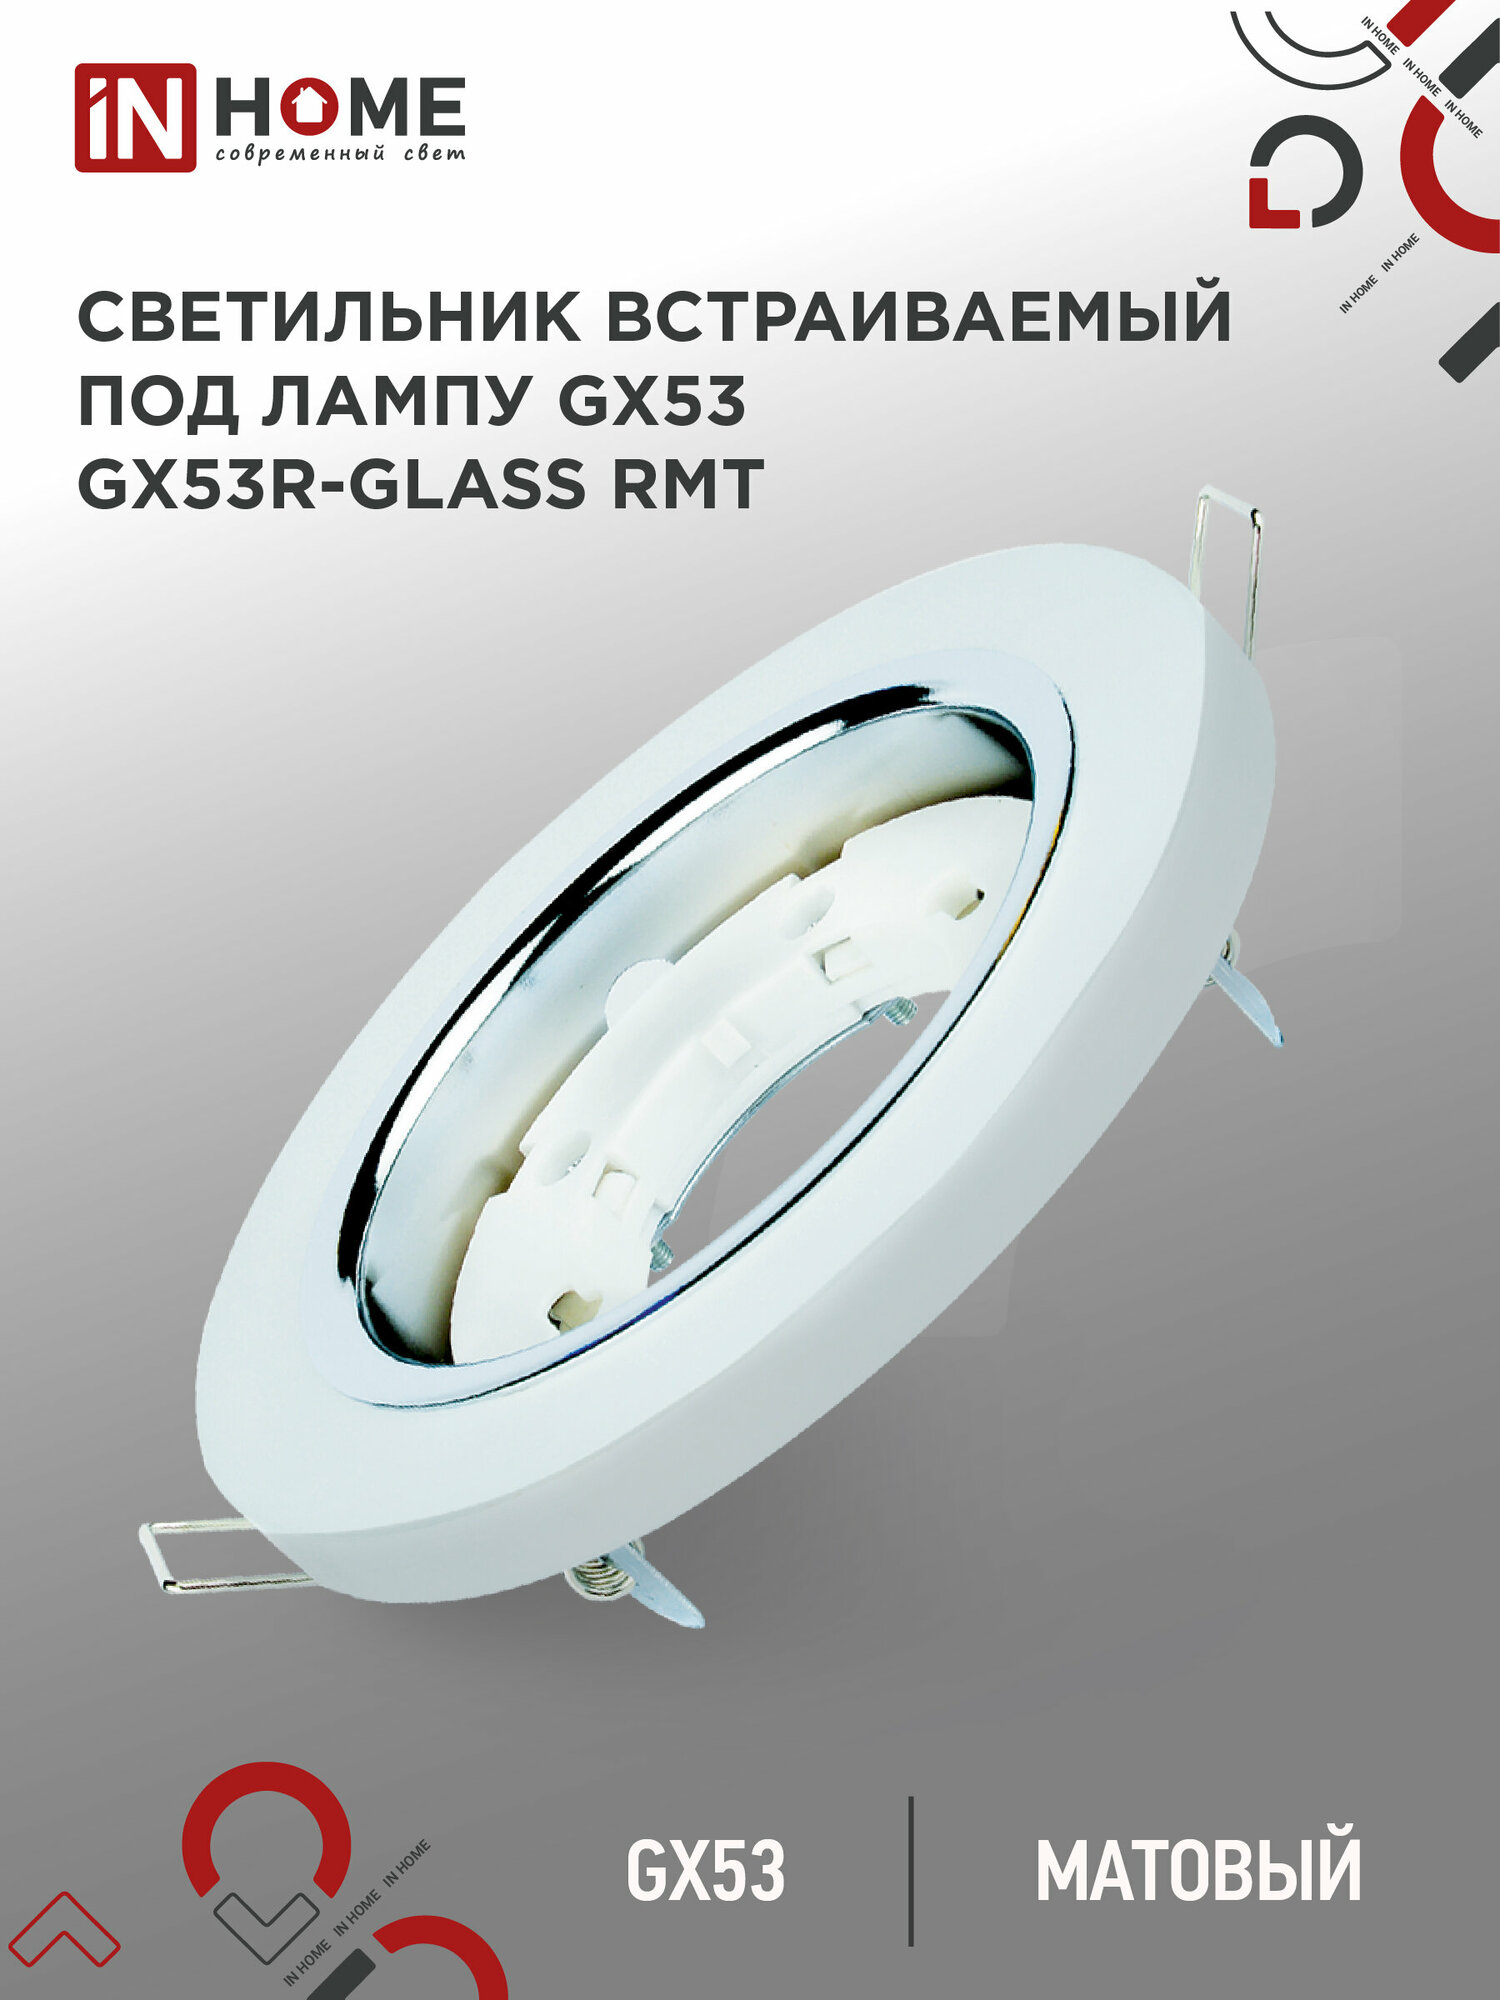 In Home Светильник встраиваемый gx53r-rmt-glass под лампу gx53 круг стекло 230b матовый in home